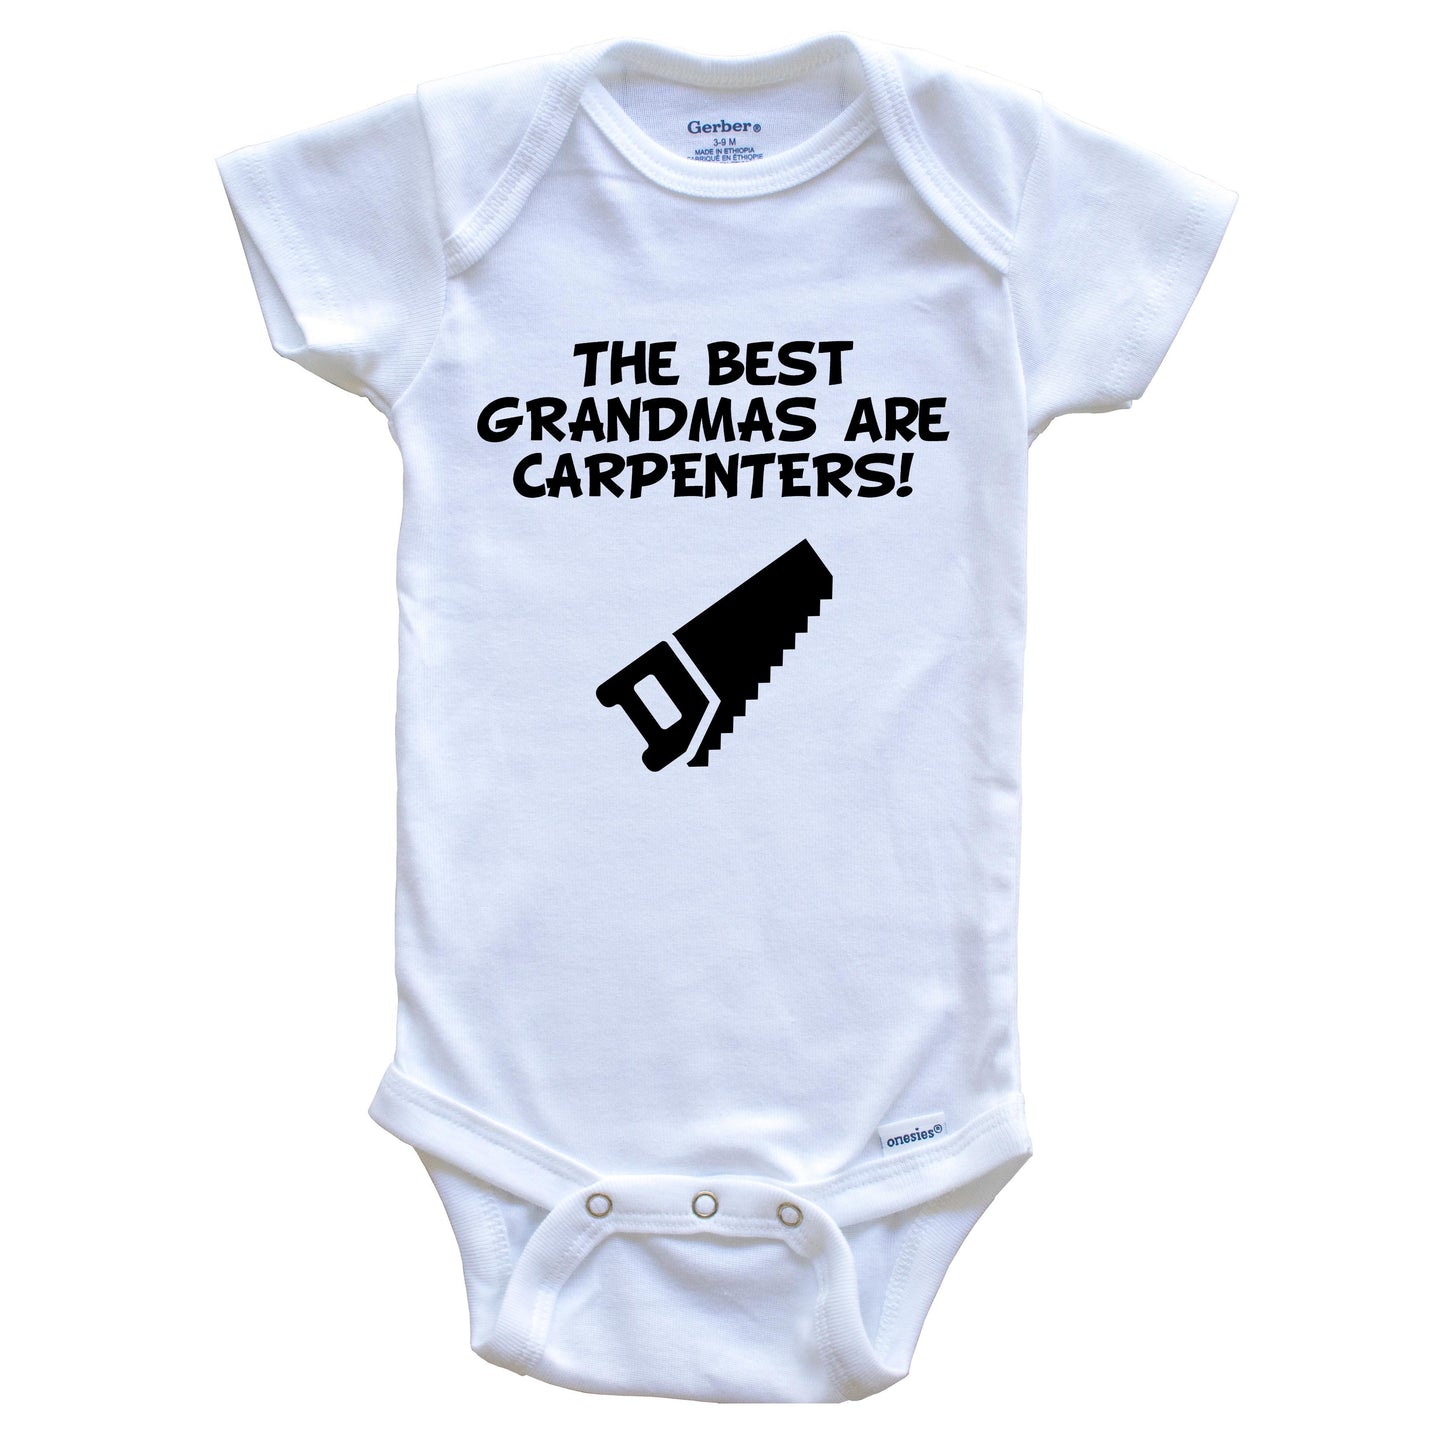 The Best Grandmas Are Carpenters Funny Grandchild Baby Onesie